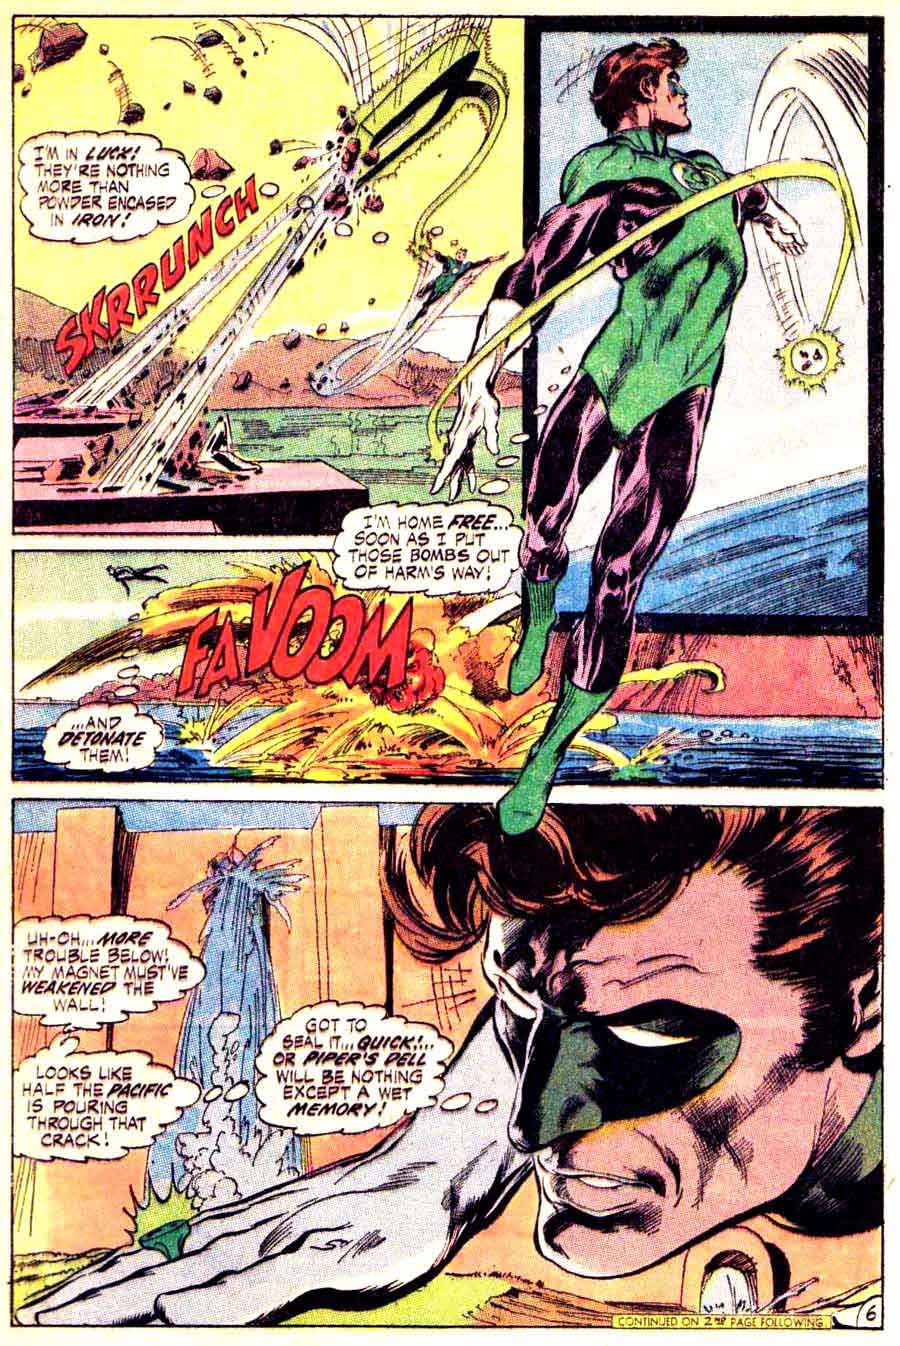 Green Lantern Green Arrow #84 bronze age 1970s dc comic book page art by Neal Adams